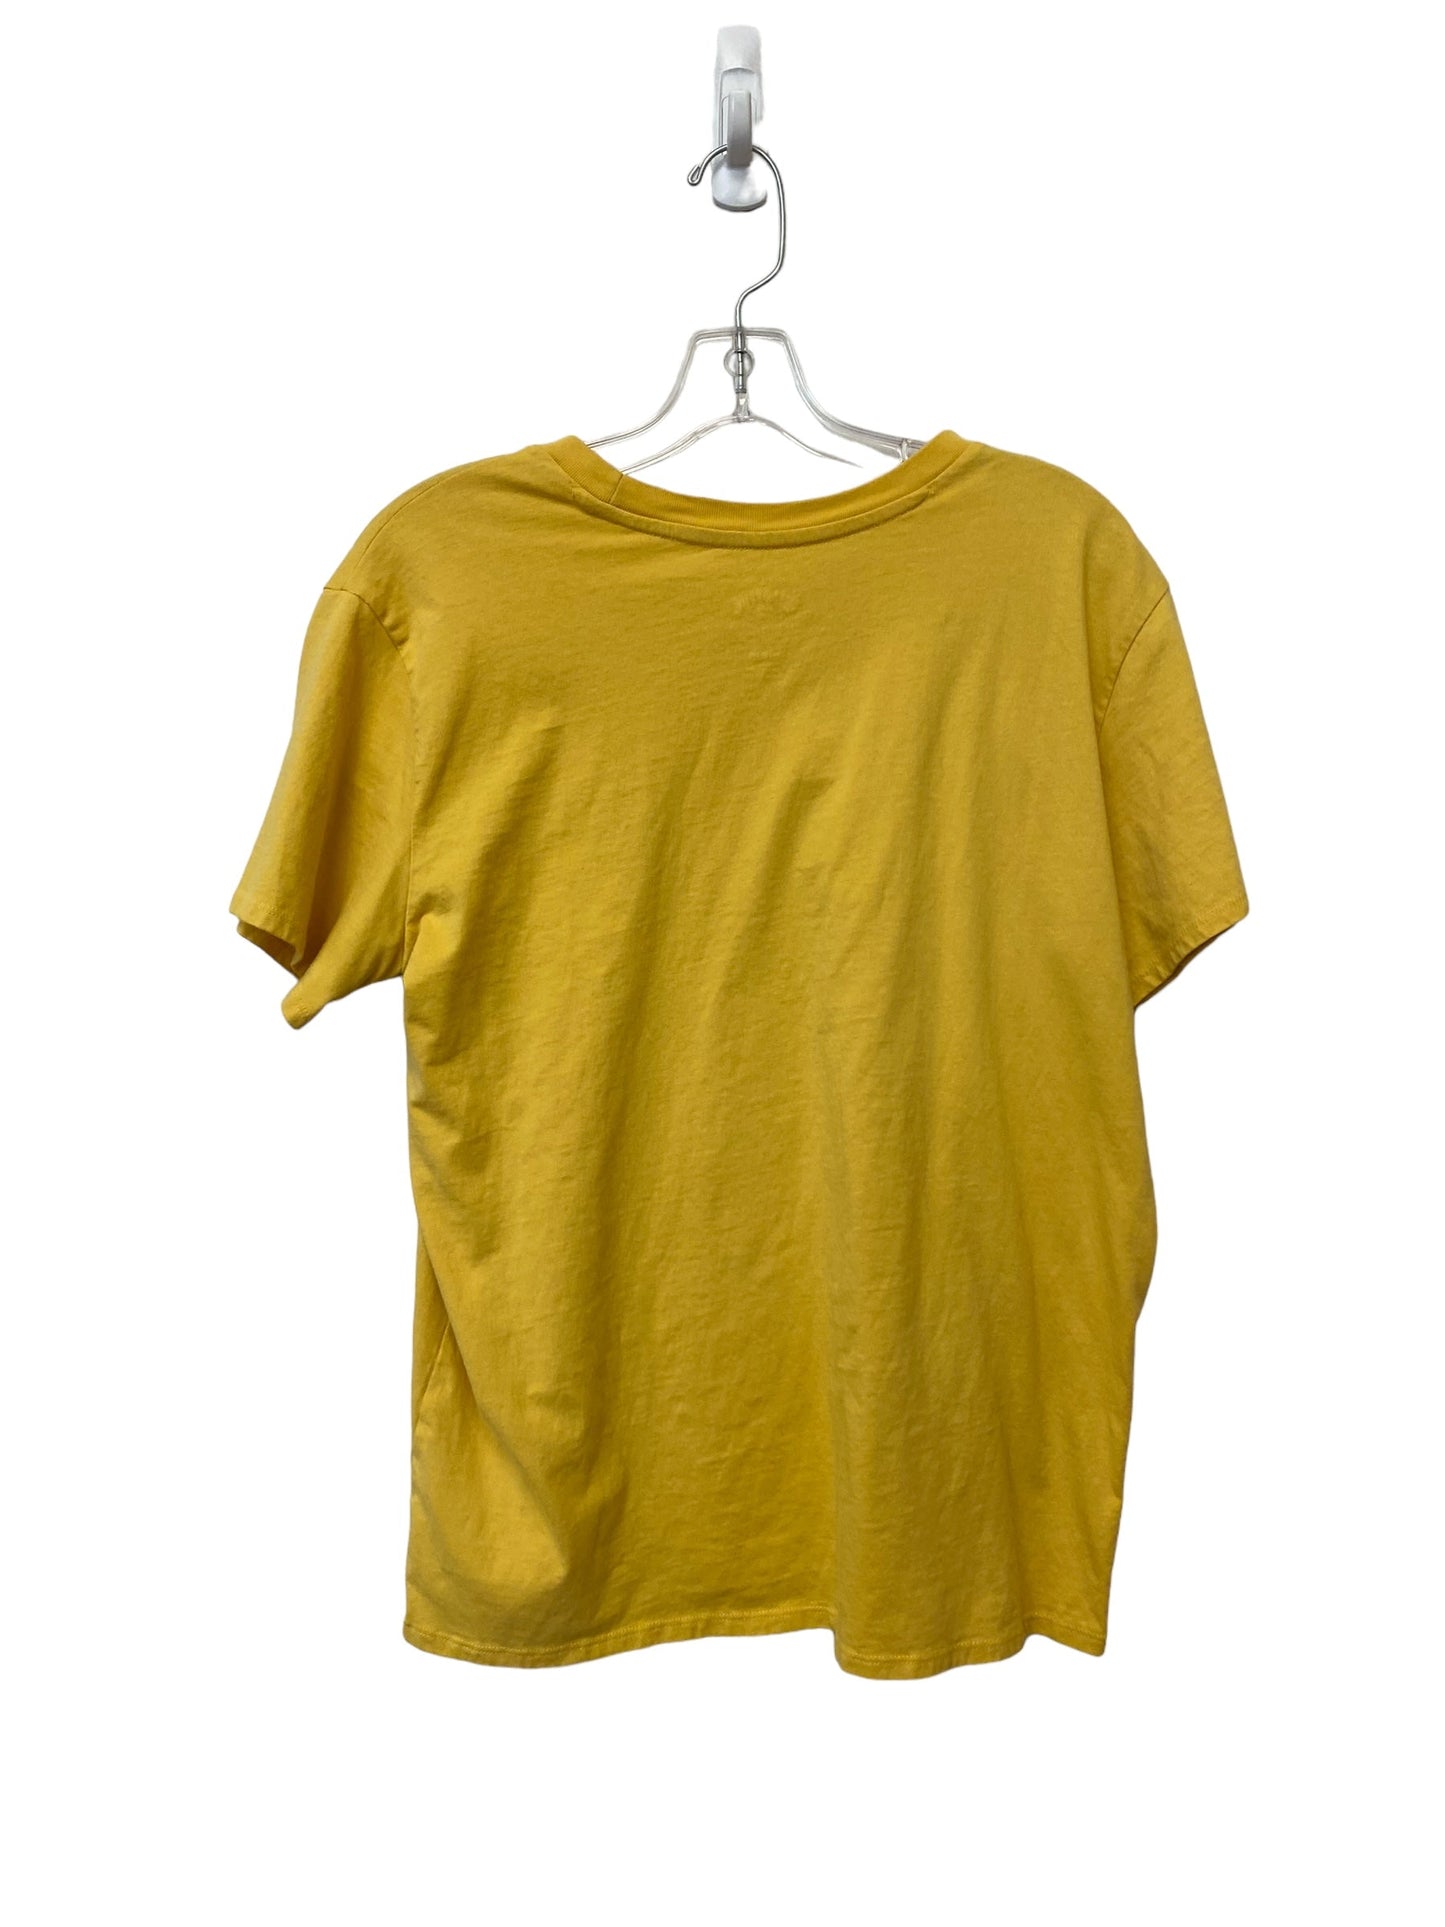 Yellow Top Short Sleeve Basic Billabong, Size L